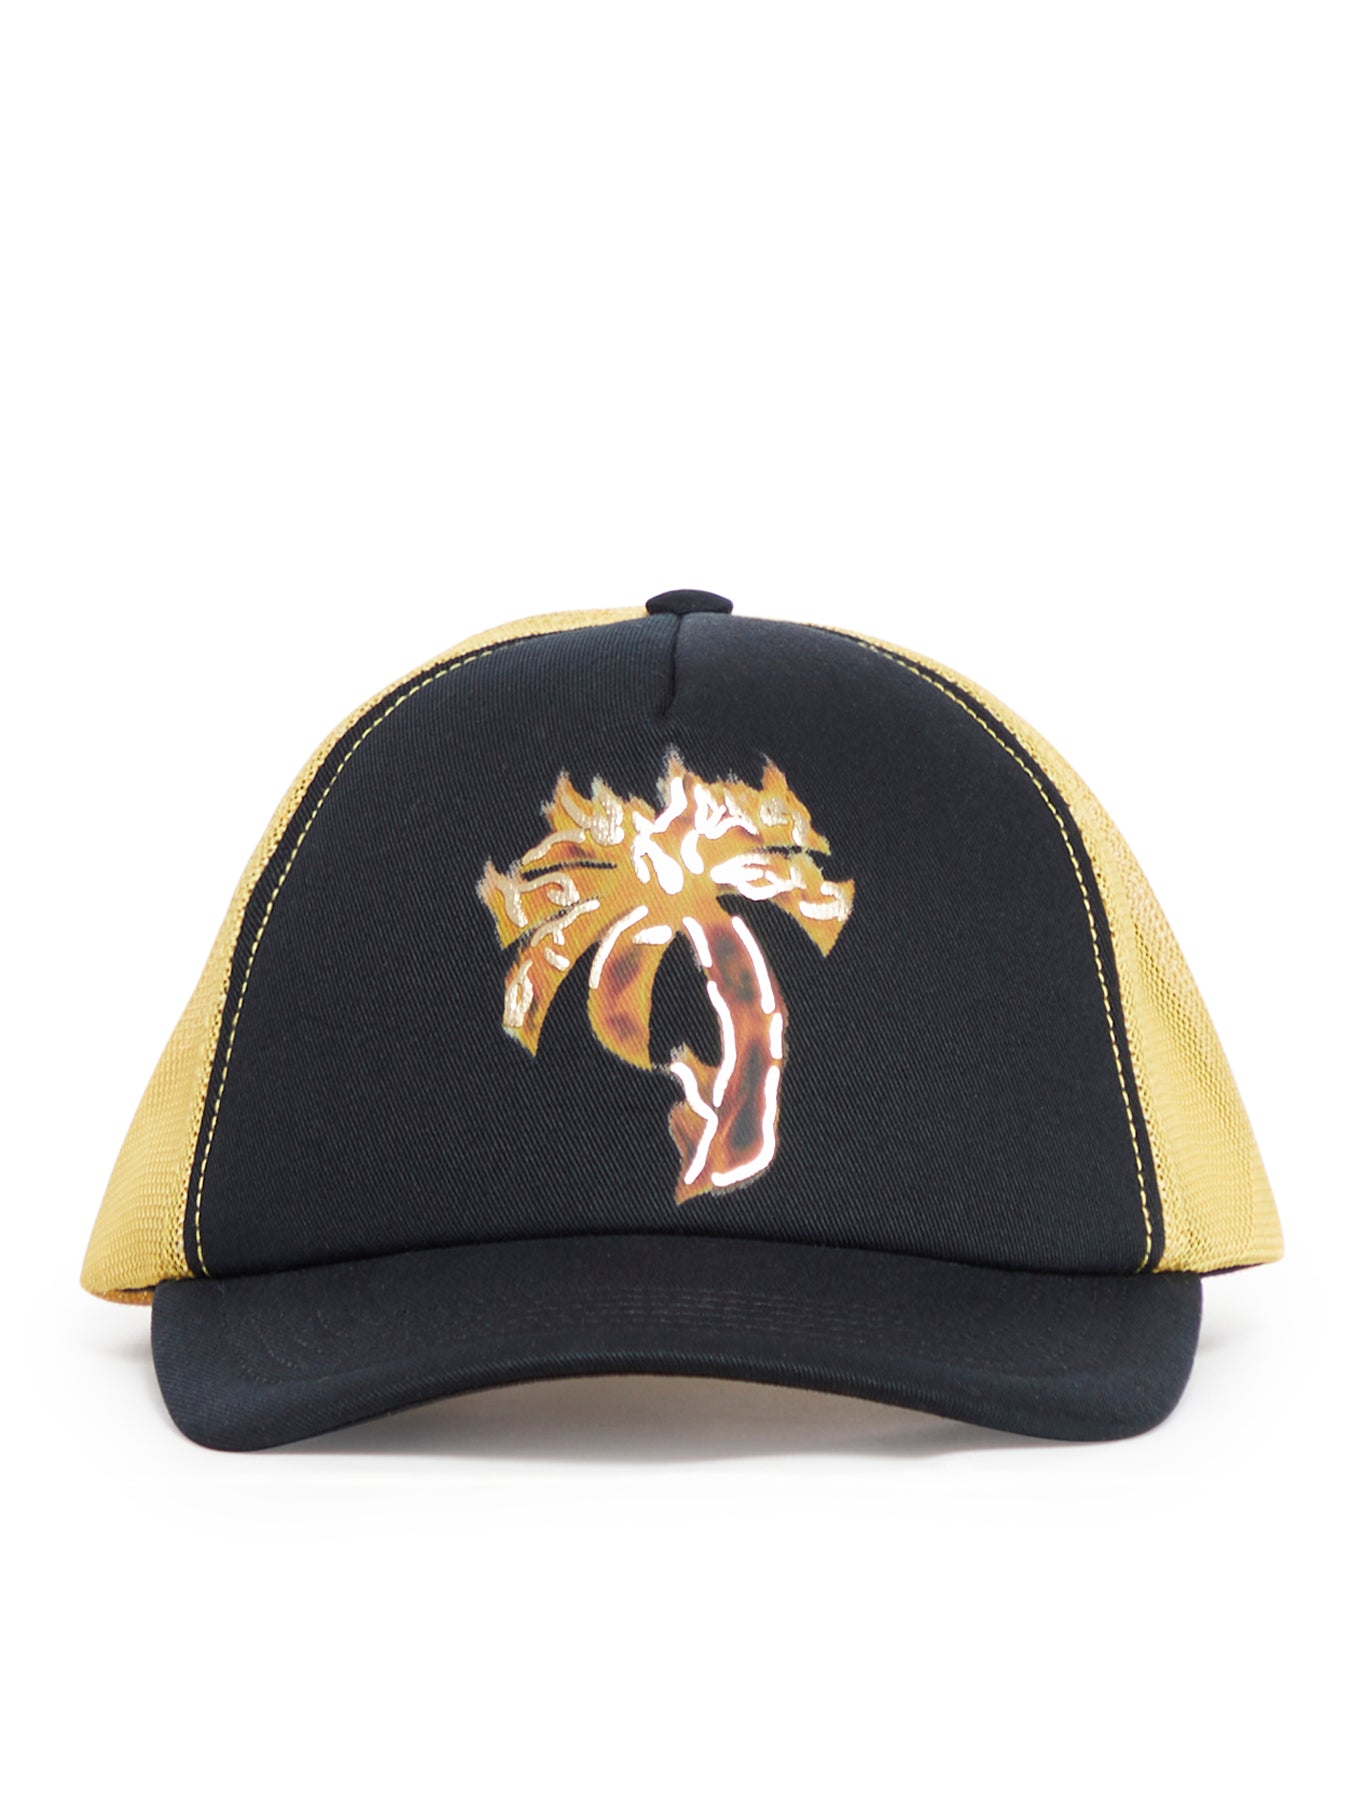 Baseball hat with Burning Palm print